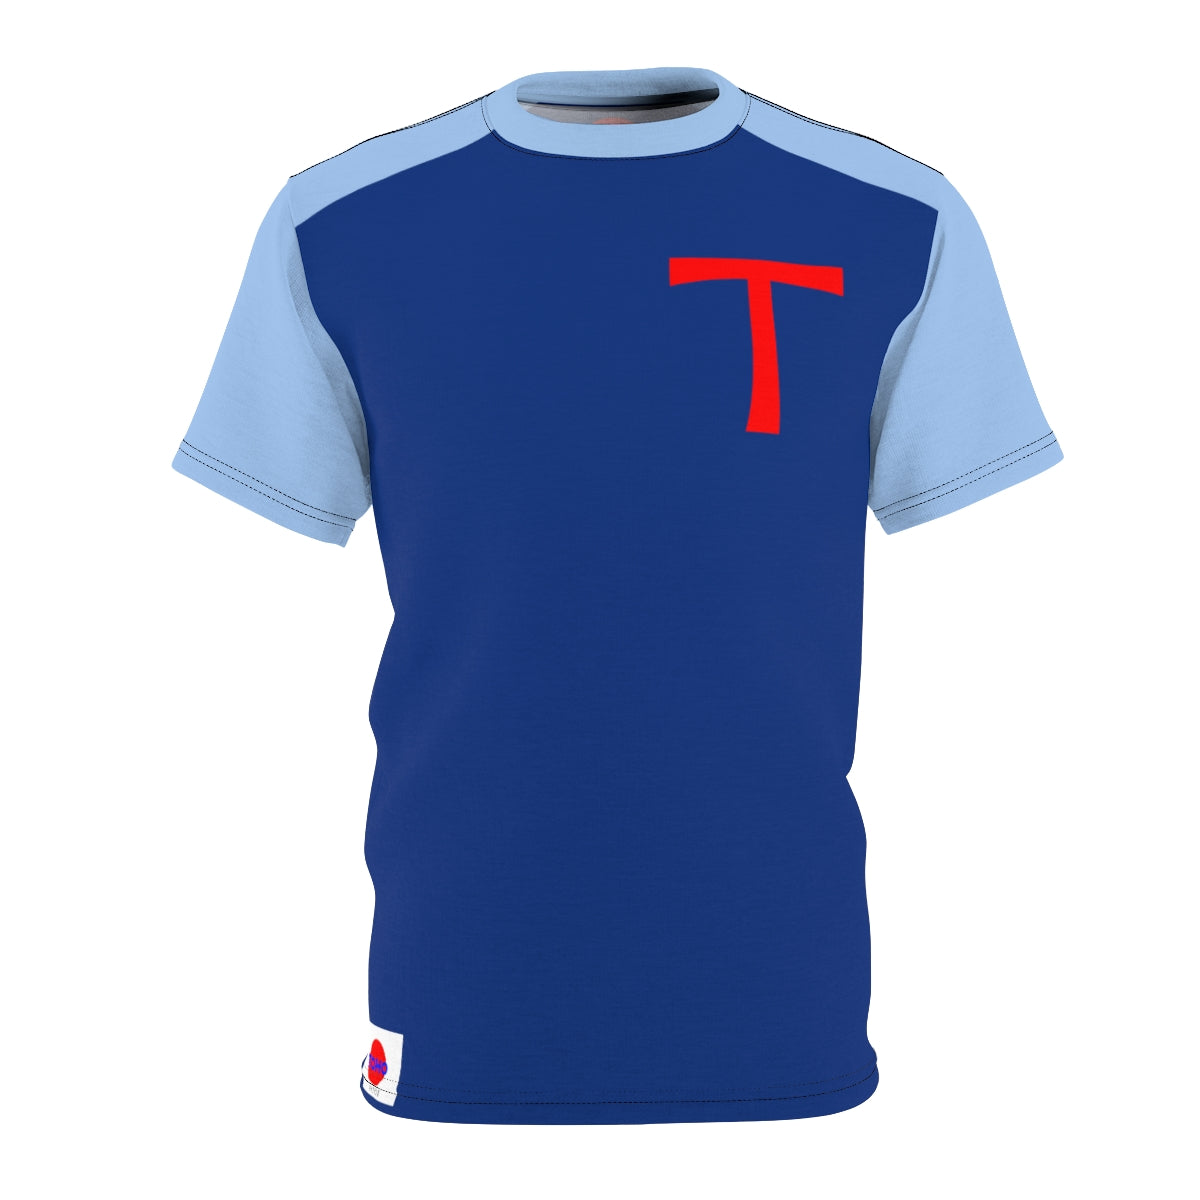 Captain Tsubasa - Toho Team, Mark Lenders | Cosplay fashion t-shirt